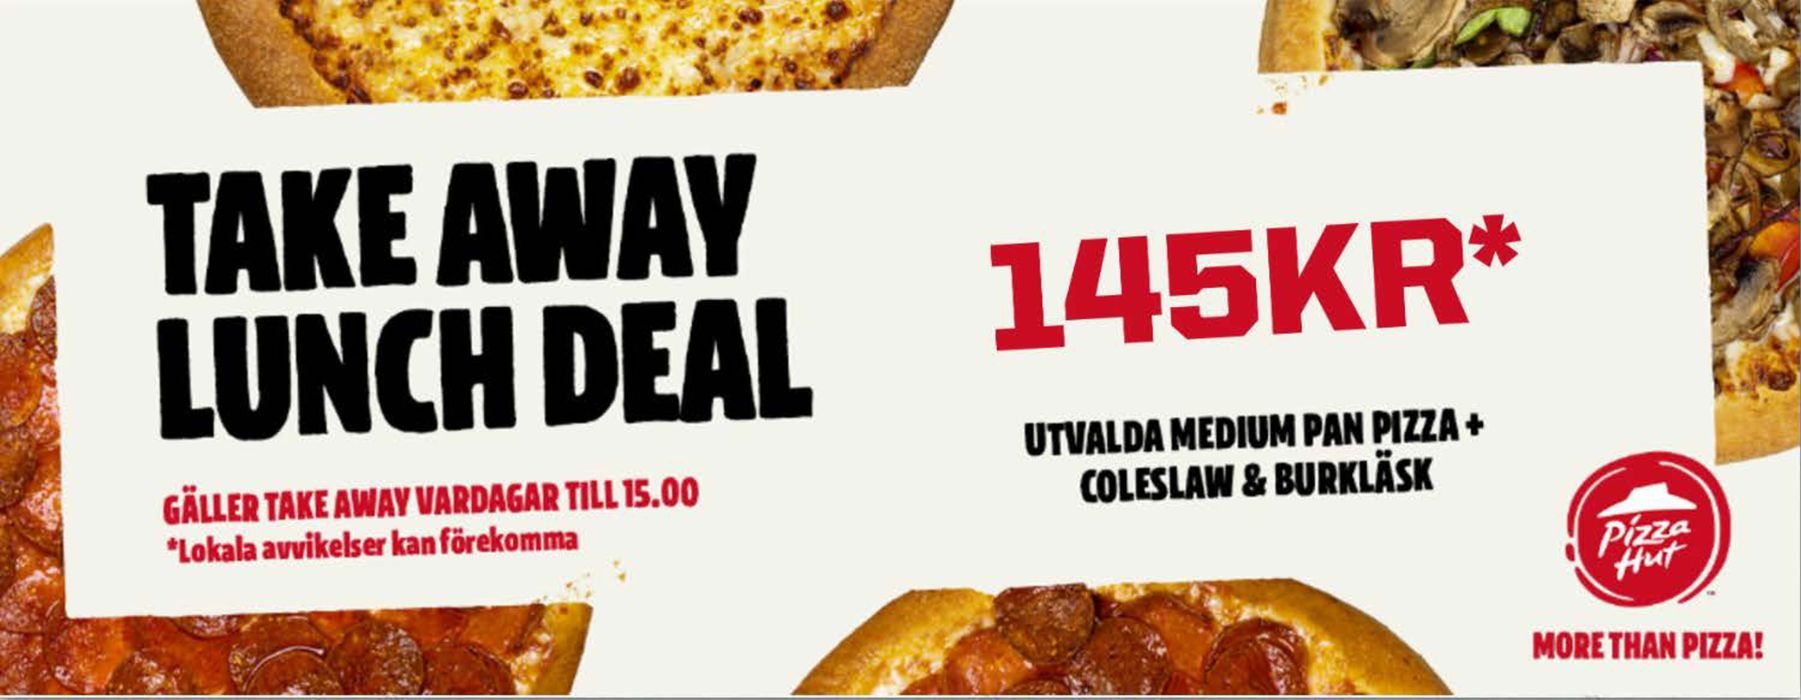 Pizza Hut-katalog i Örebro | Nya pizzor på lunchbuffen ! | 2024-05-15 - 2024-05-31